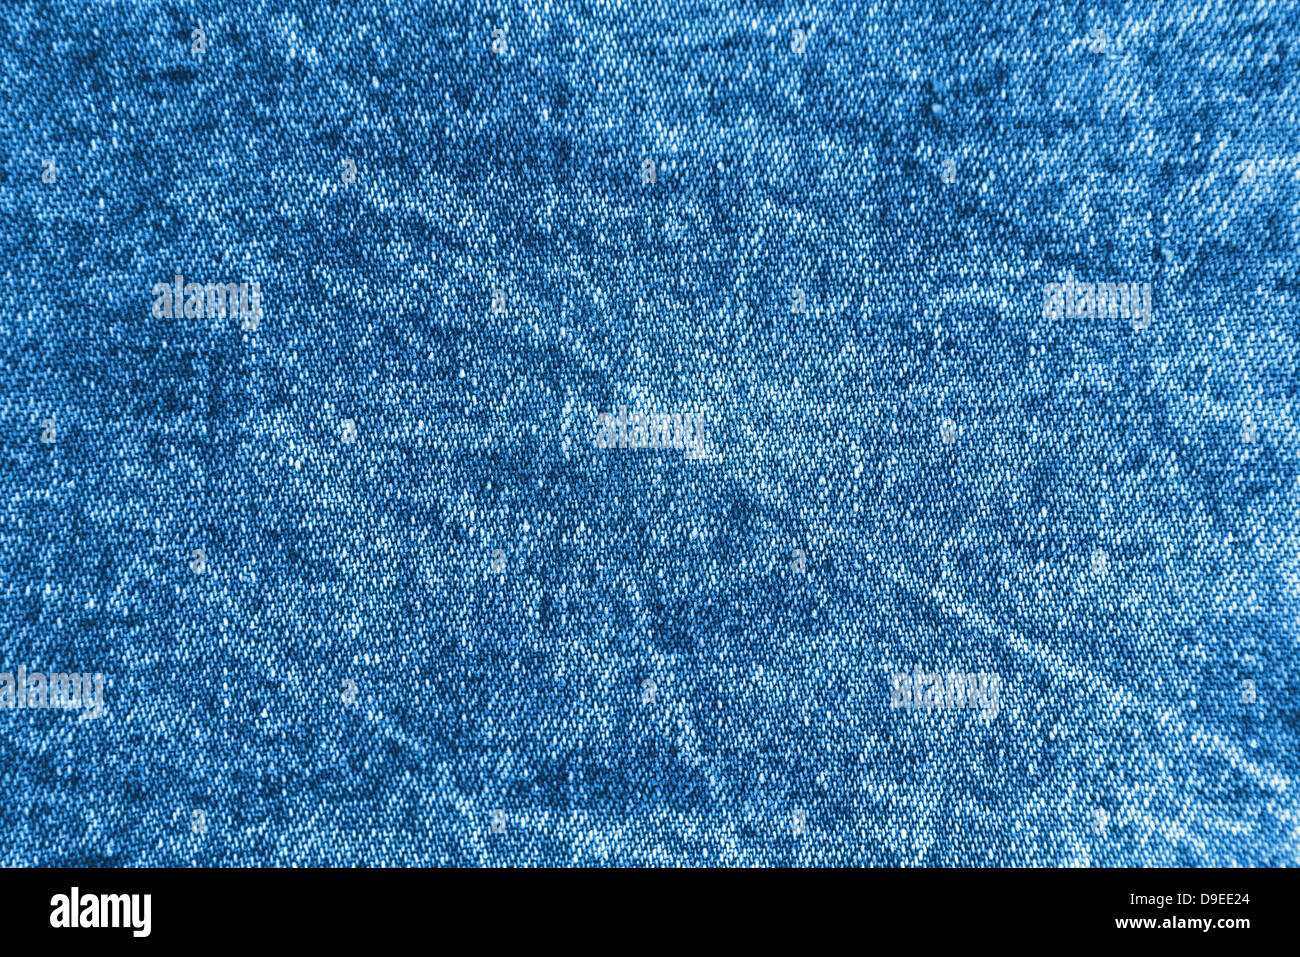 Blue jeans denim tessuto texture come sfondo Foto stock - Alamy